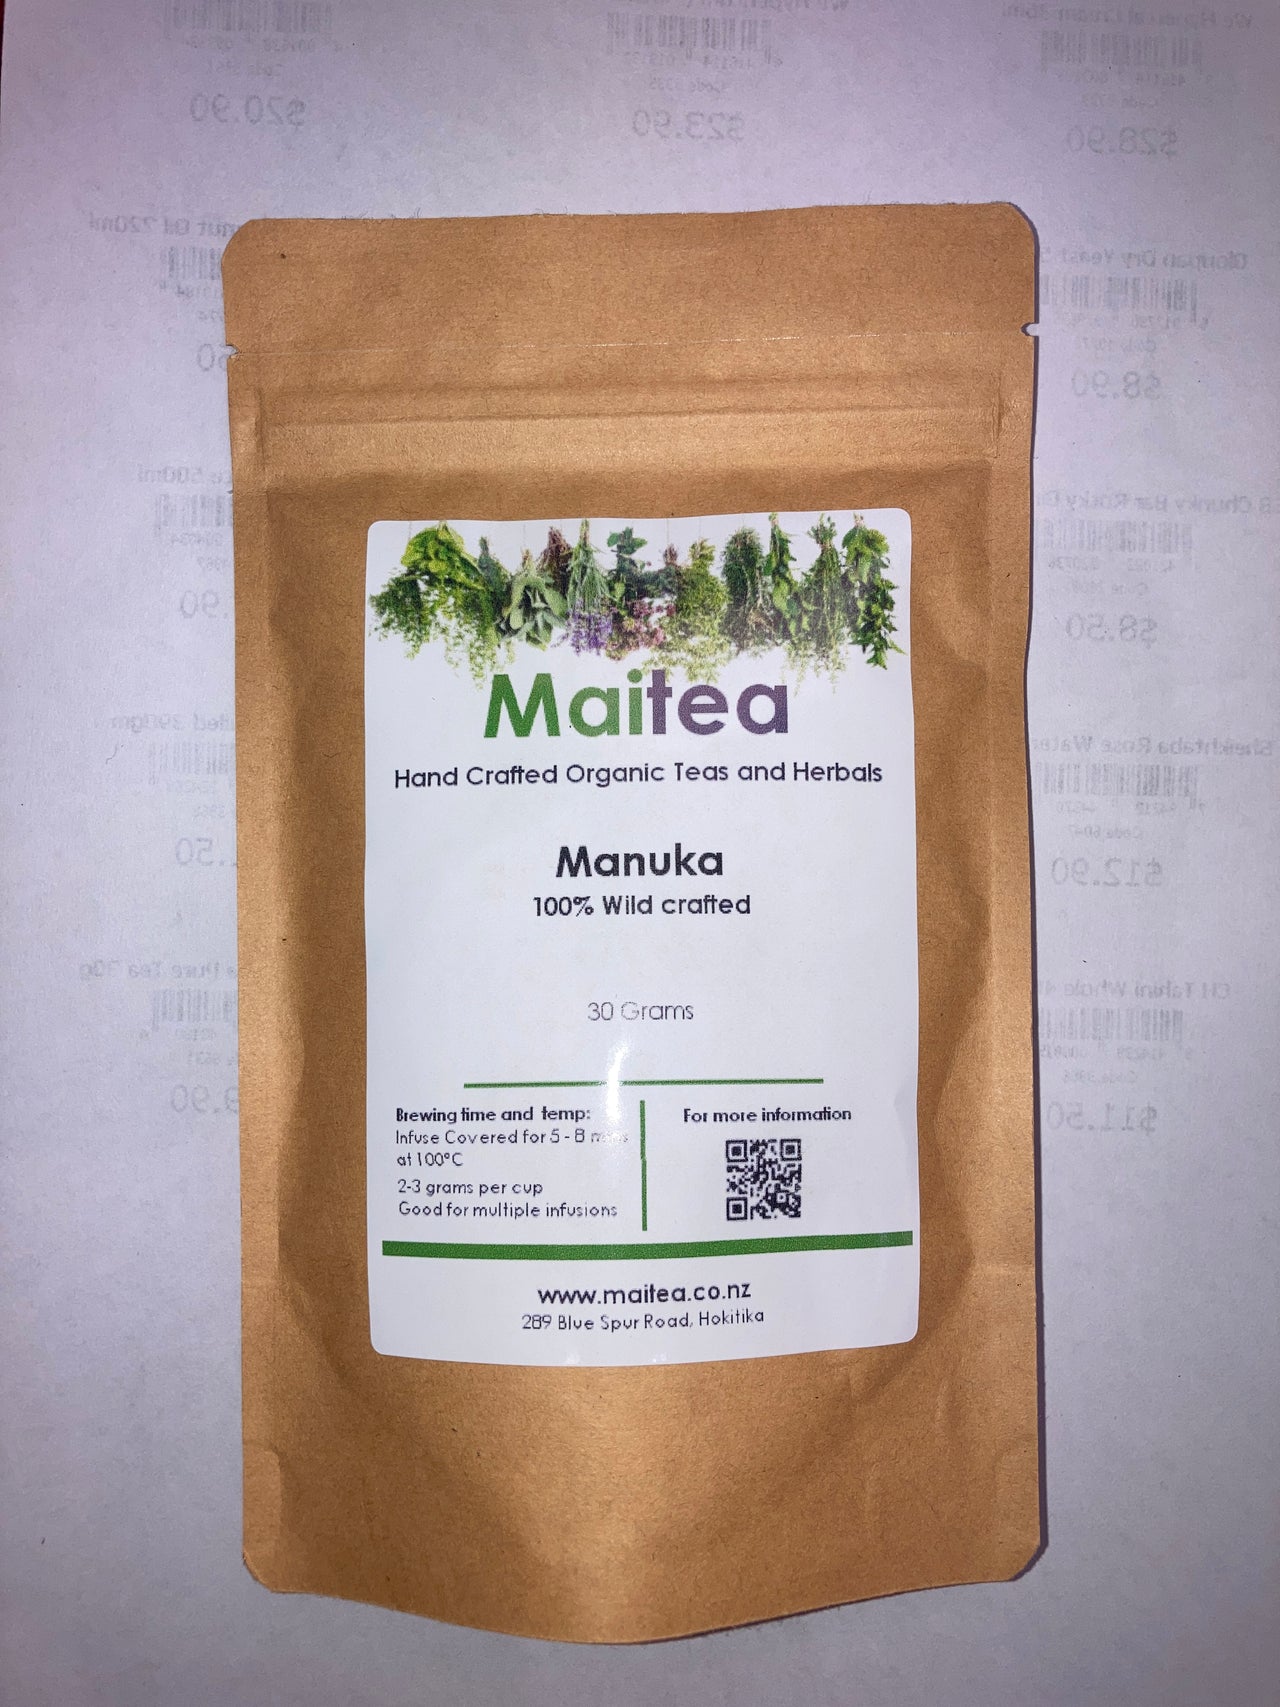 Maitea - Manuka Loose Leaf Tea - [30g]